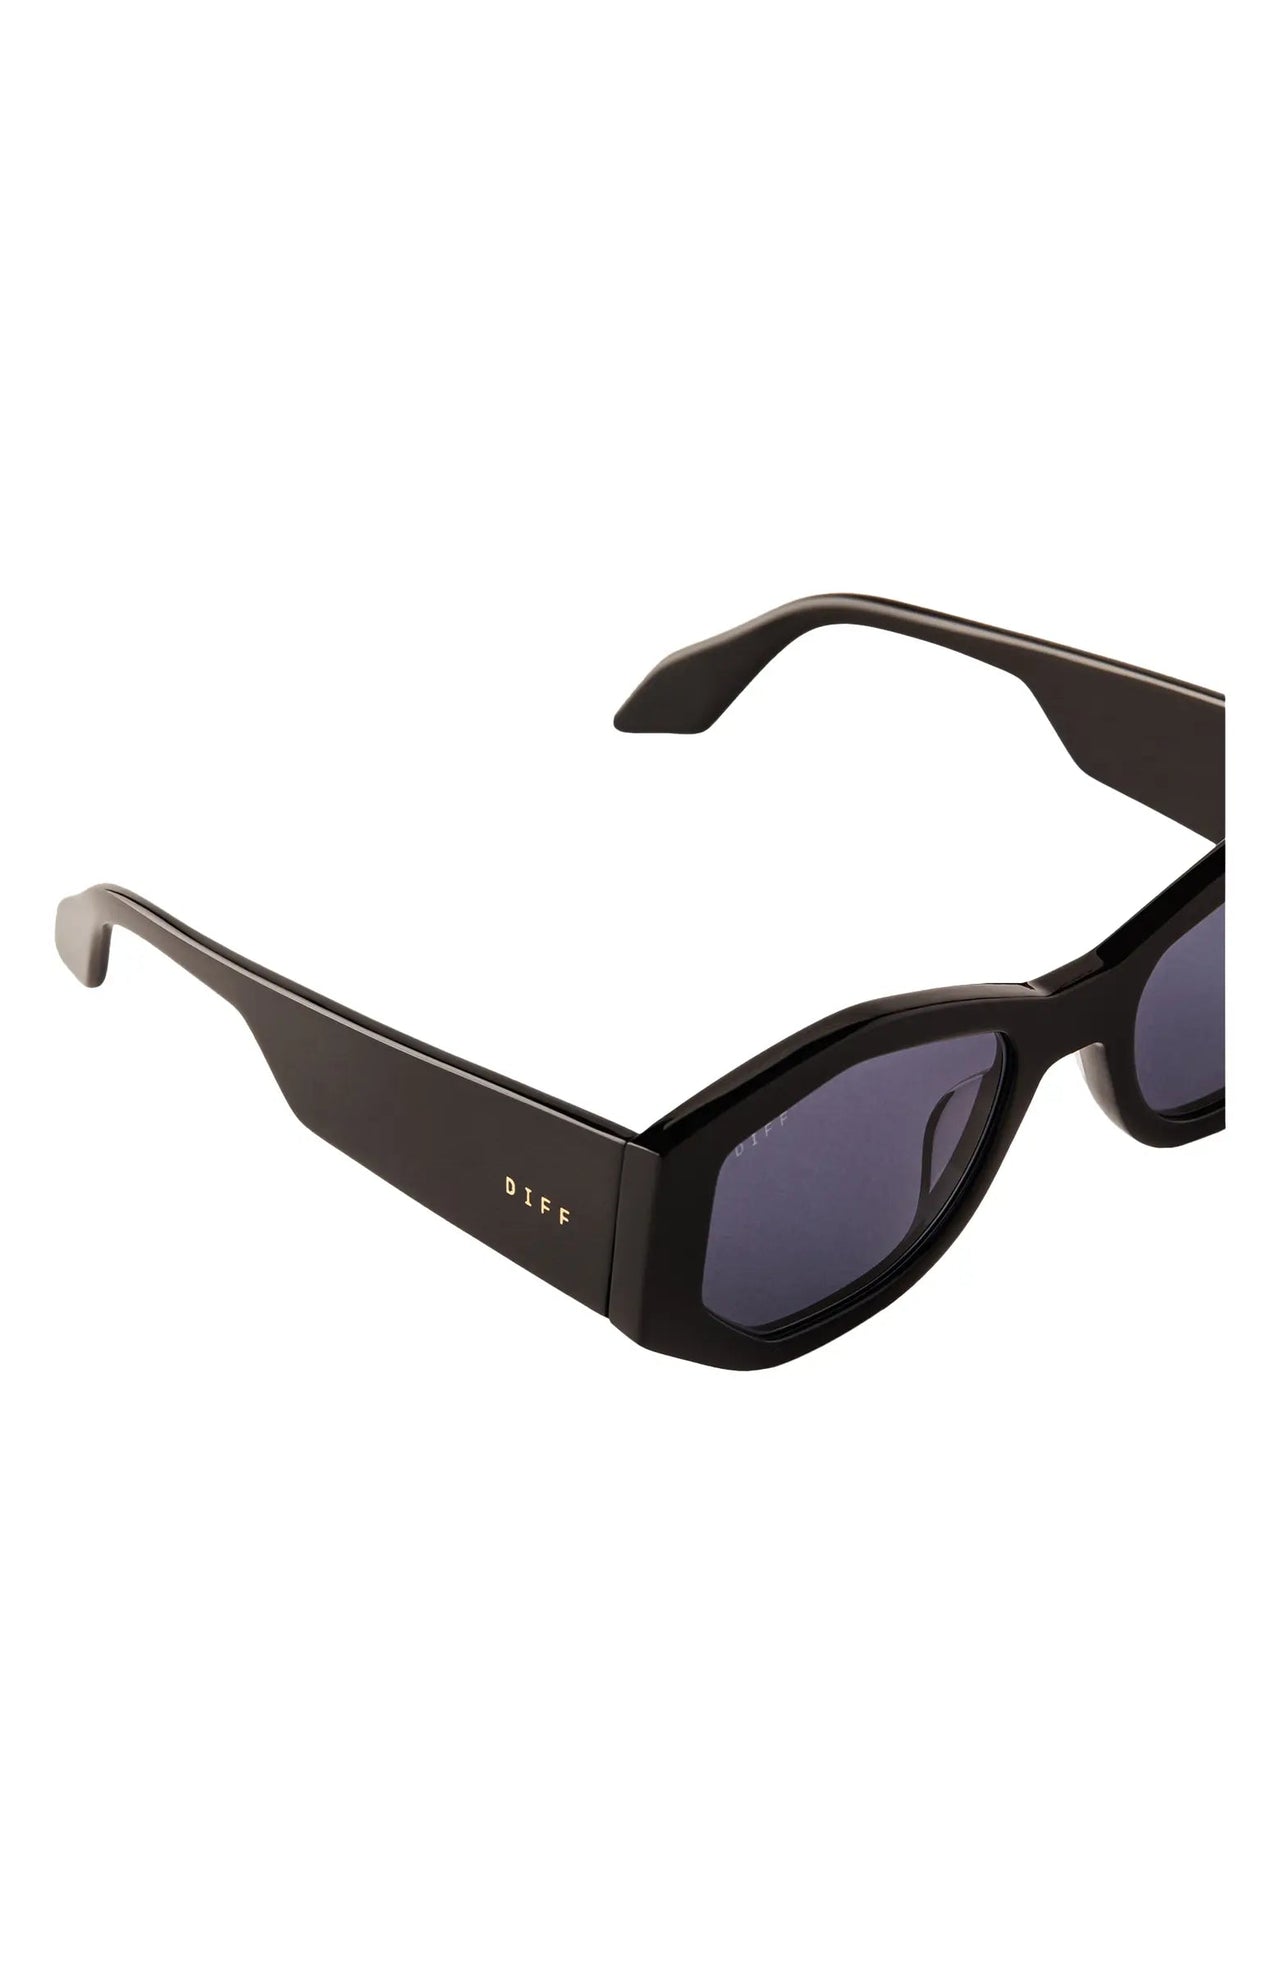 Zoe Black Grey Polarized Sunglasses, Sunglass Acc by DIFF Eyewear | LIT Boutique